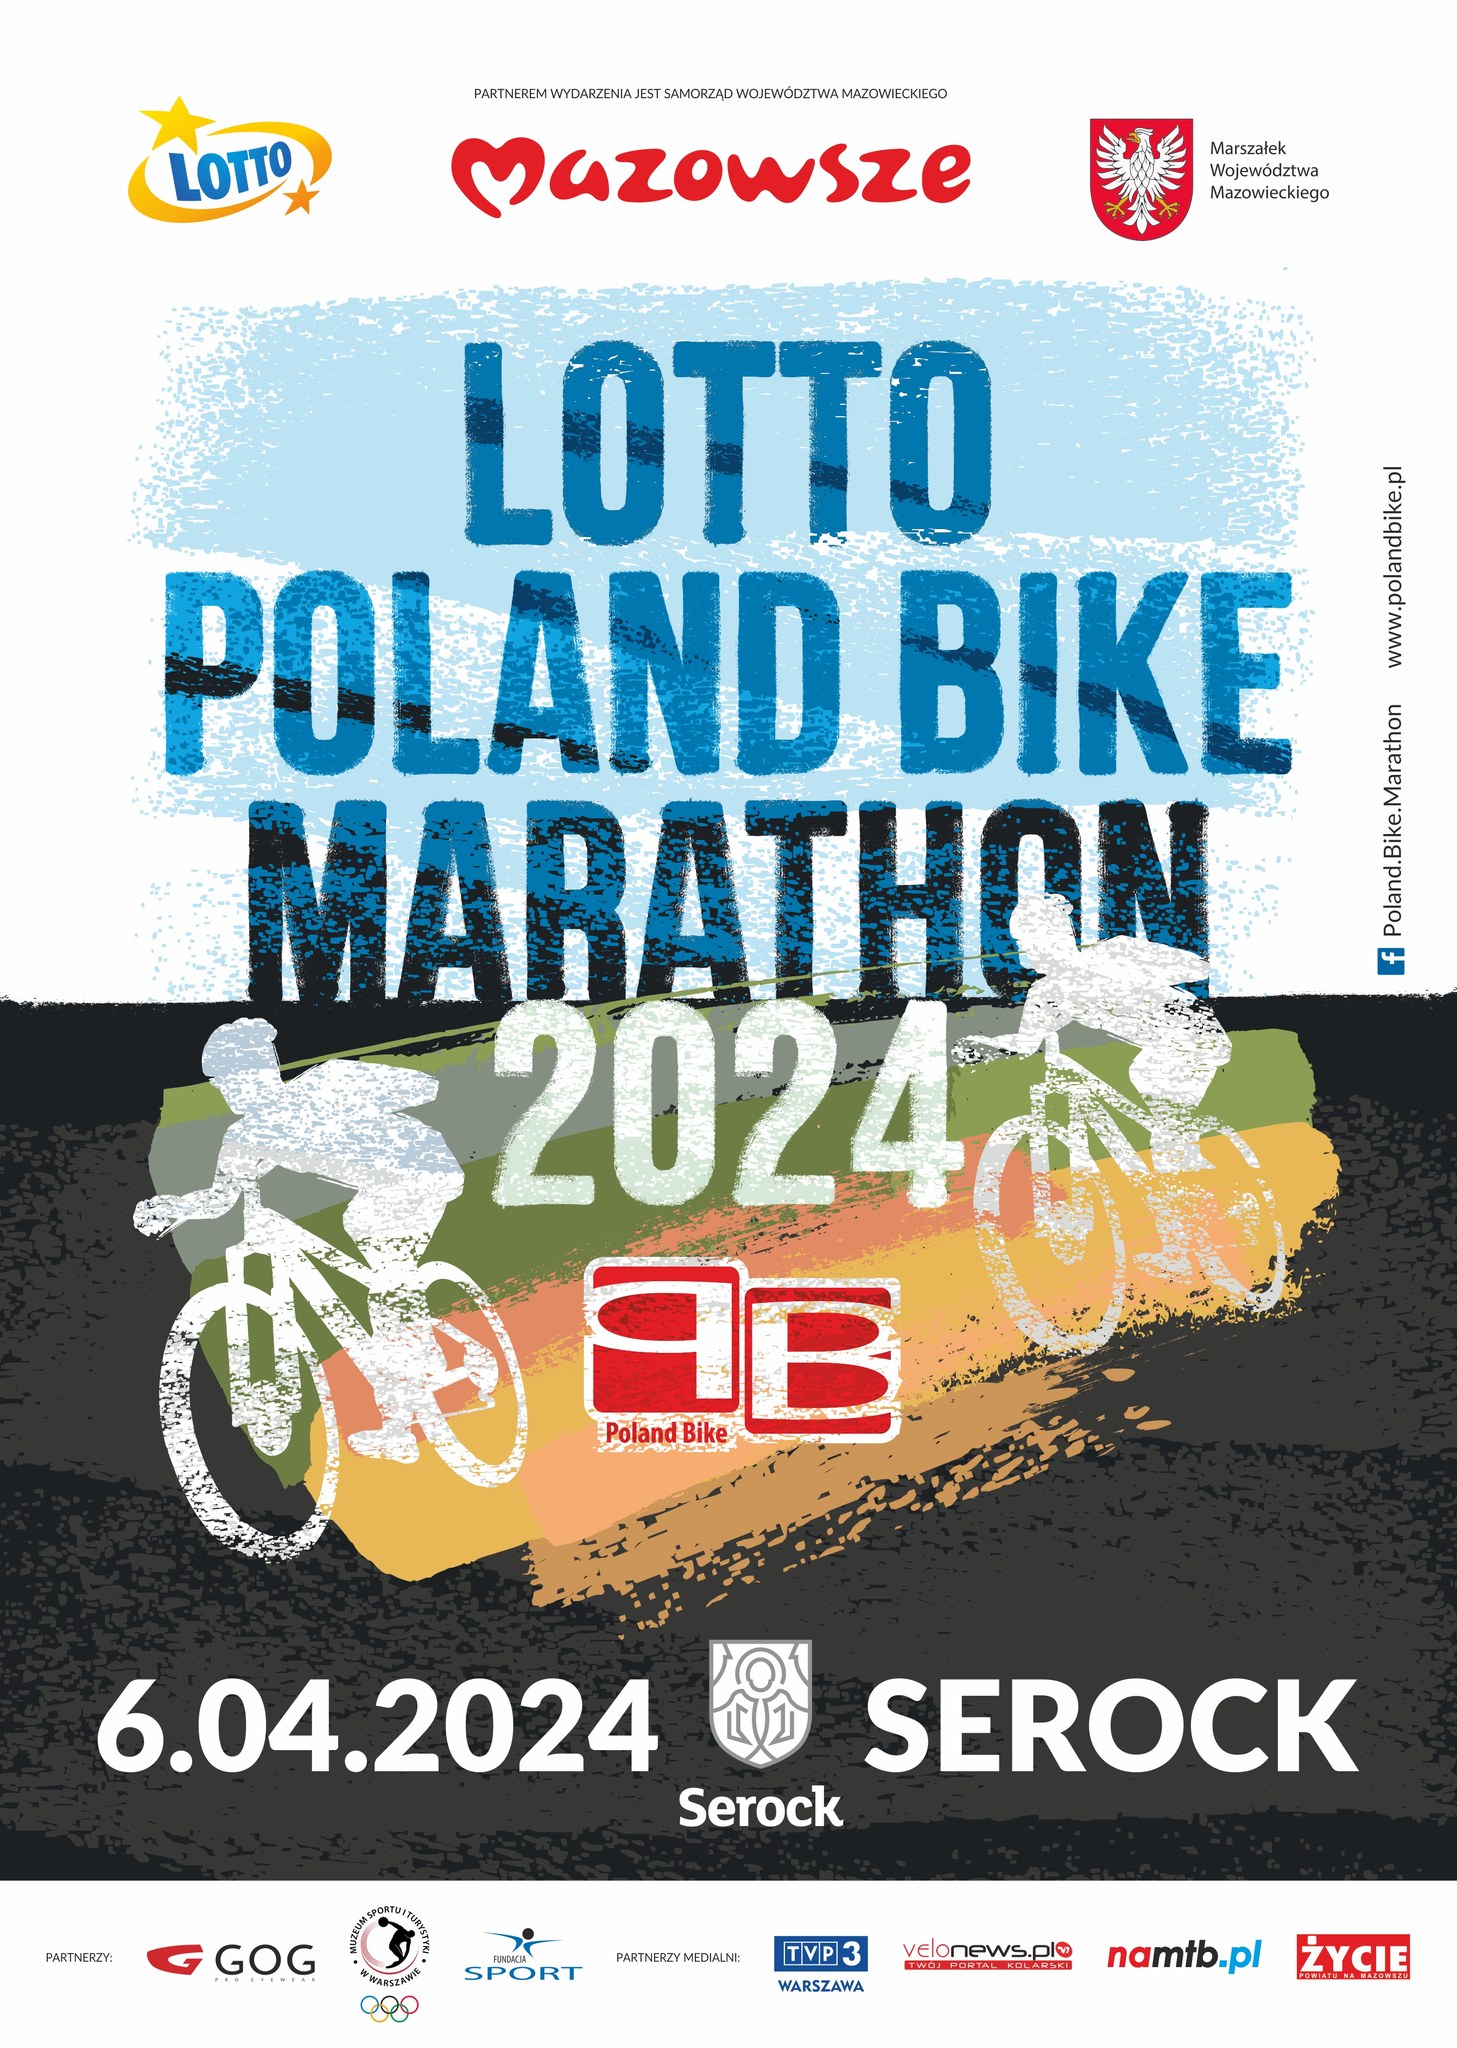 LOTTO Poland Bike Marathon